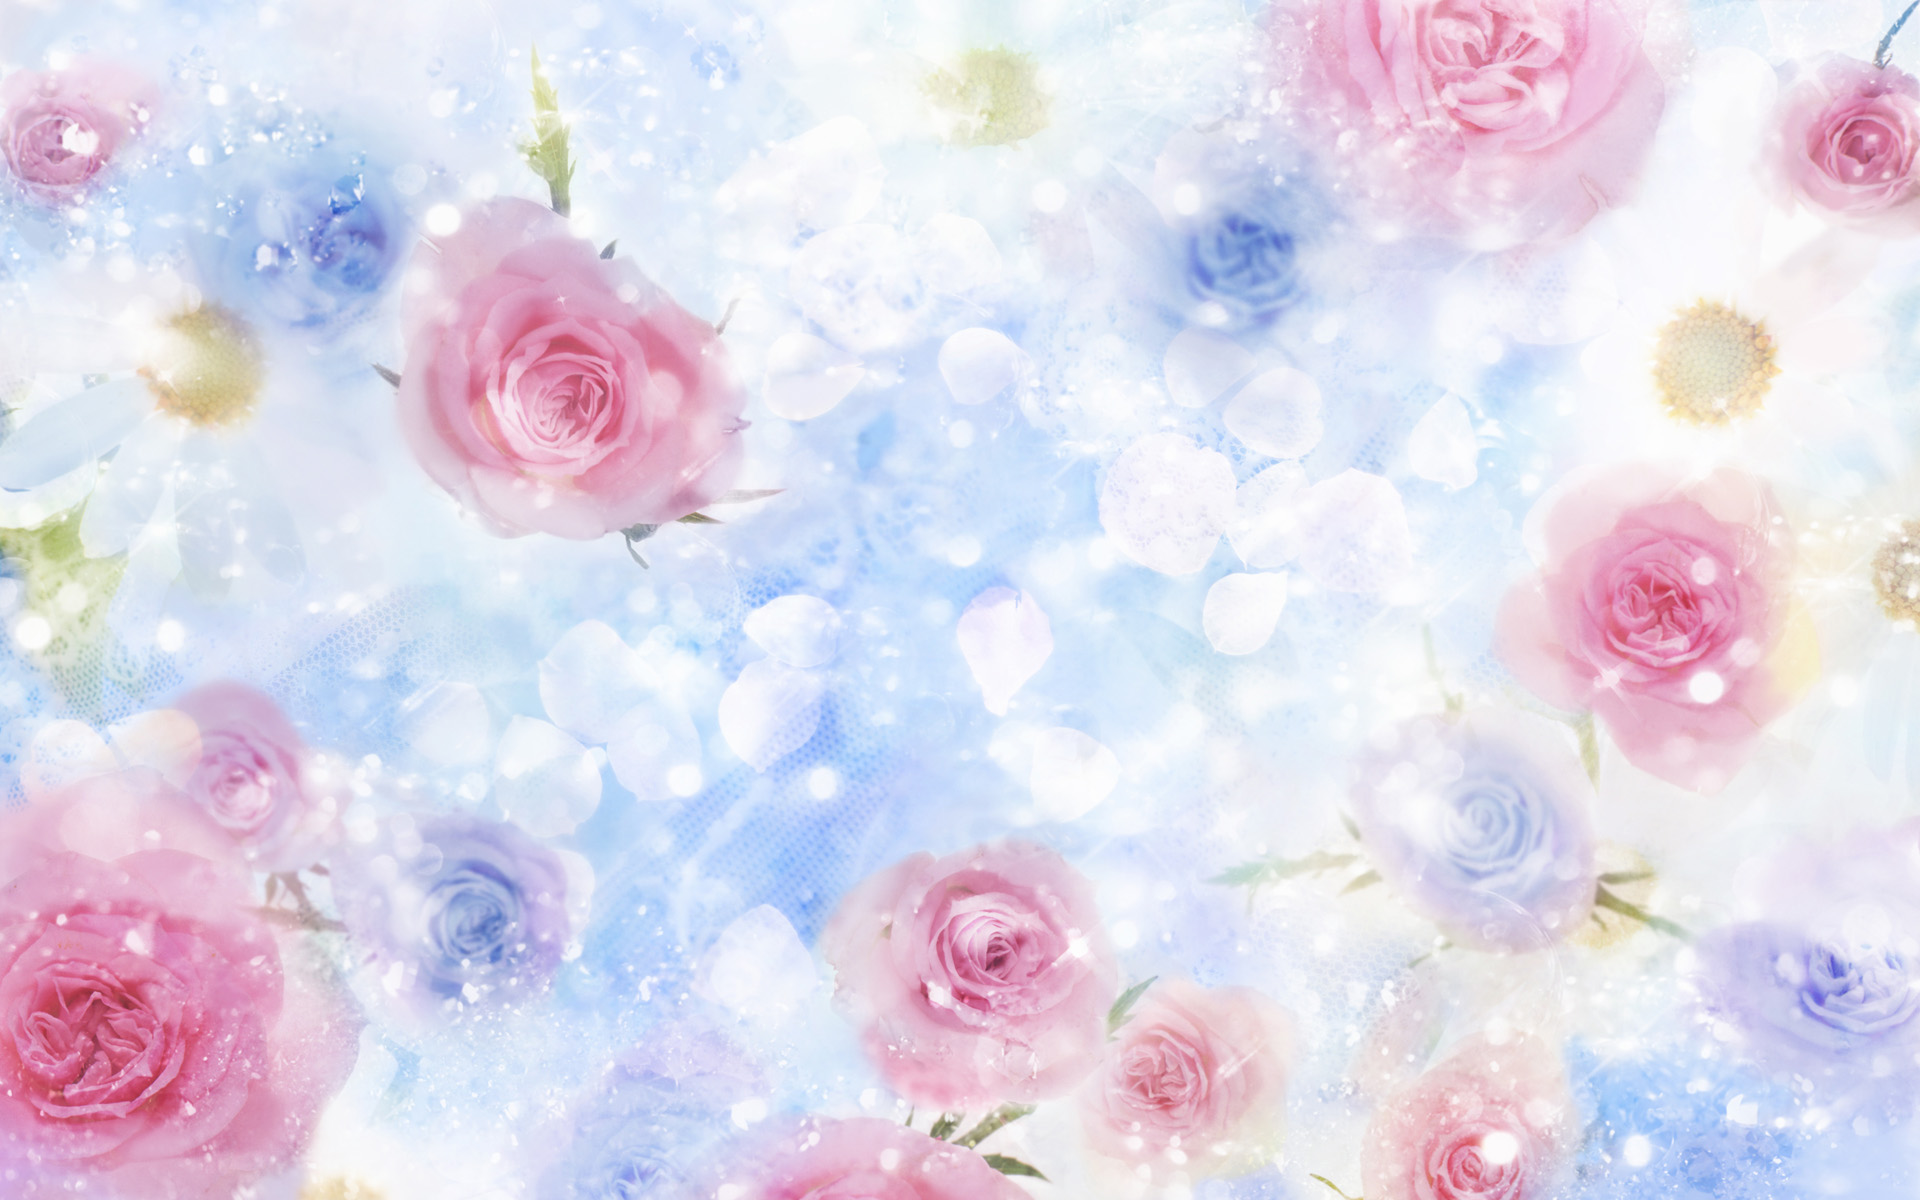 Roses Desktop Backgrounds - Wallpaper, High Definition, High Quality,  Widescreen